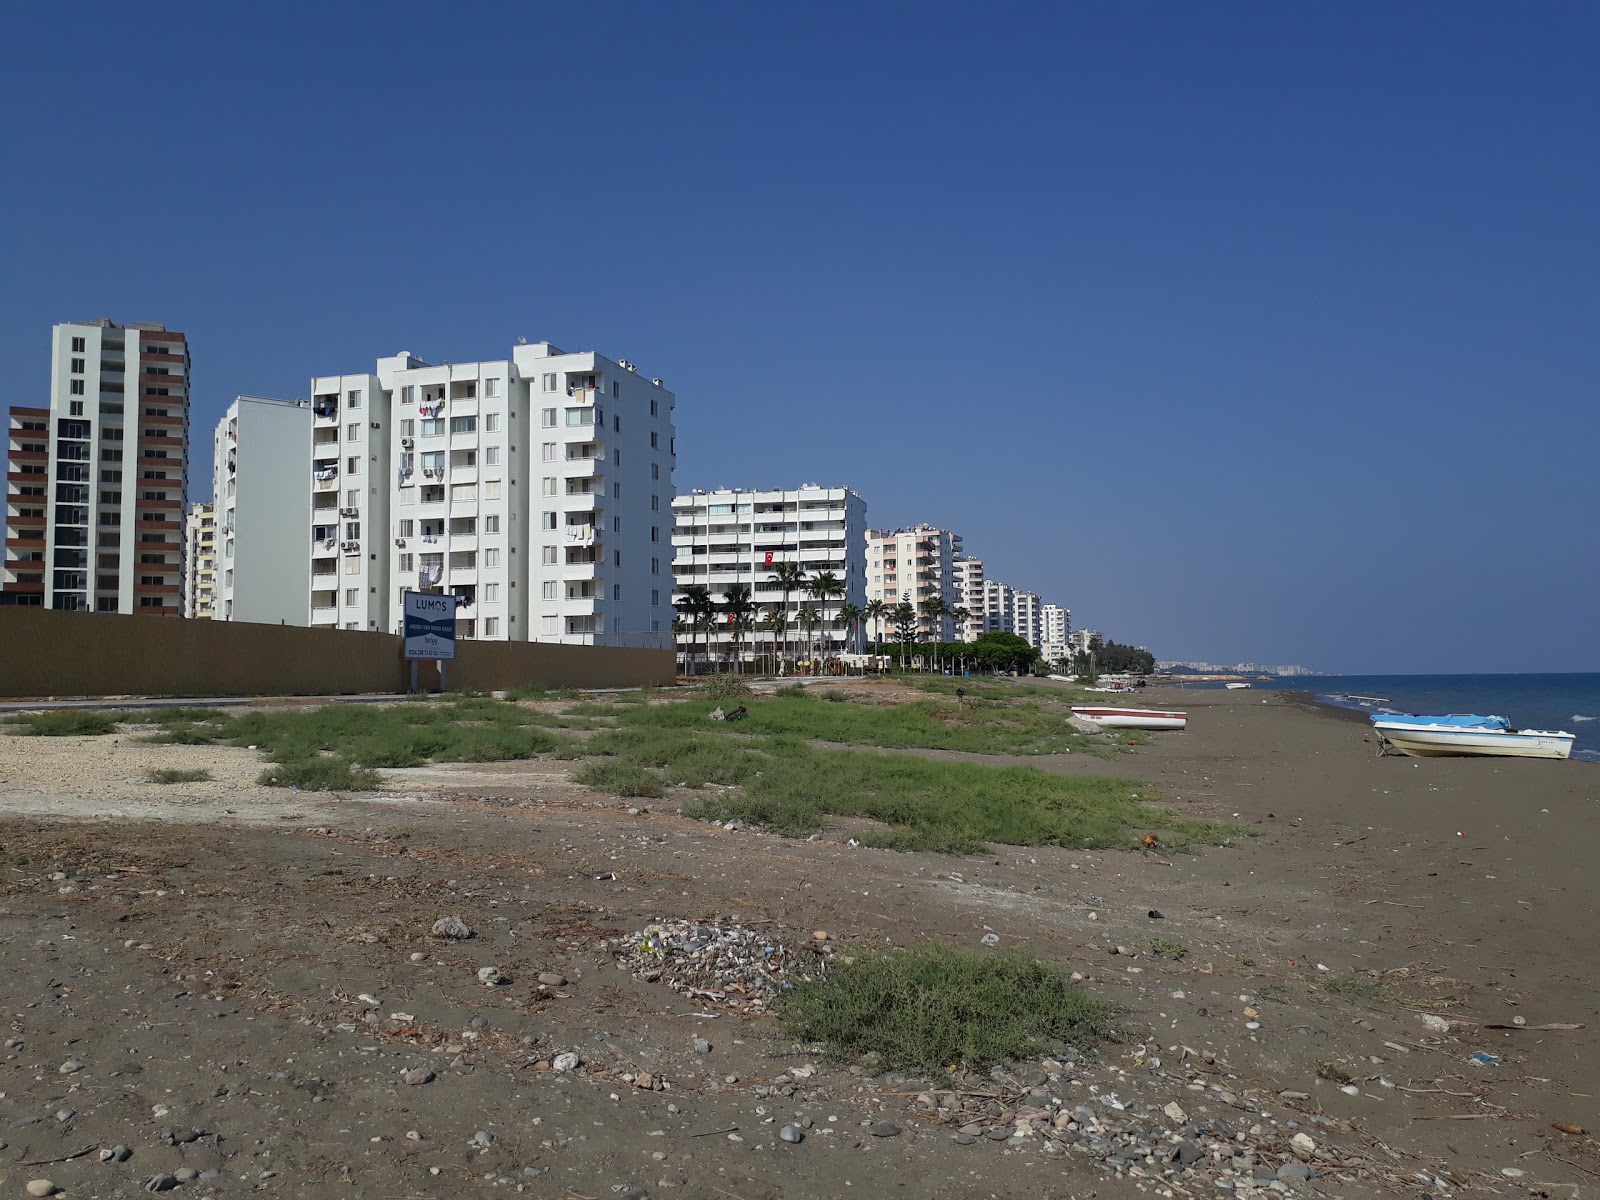 Foto van Tece Sahil beach met turquoise water oppervlakte